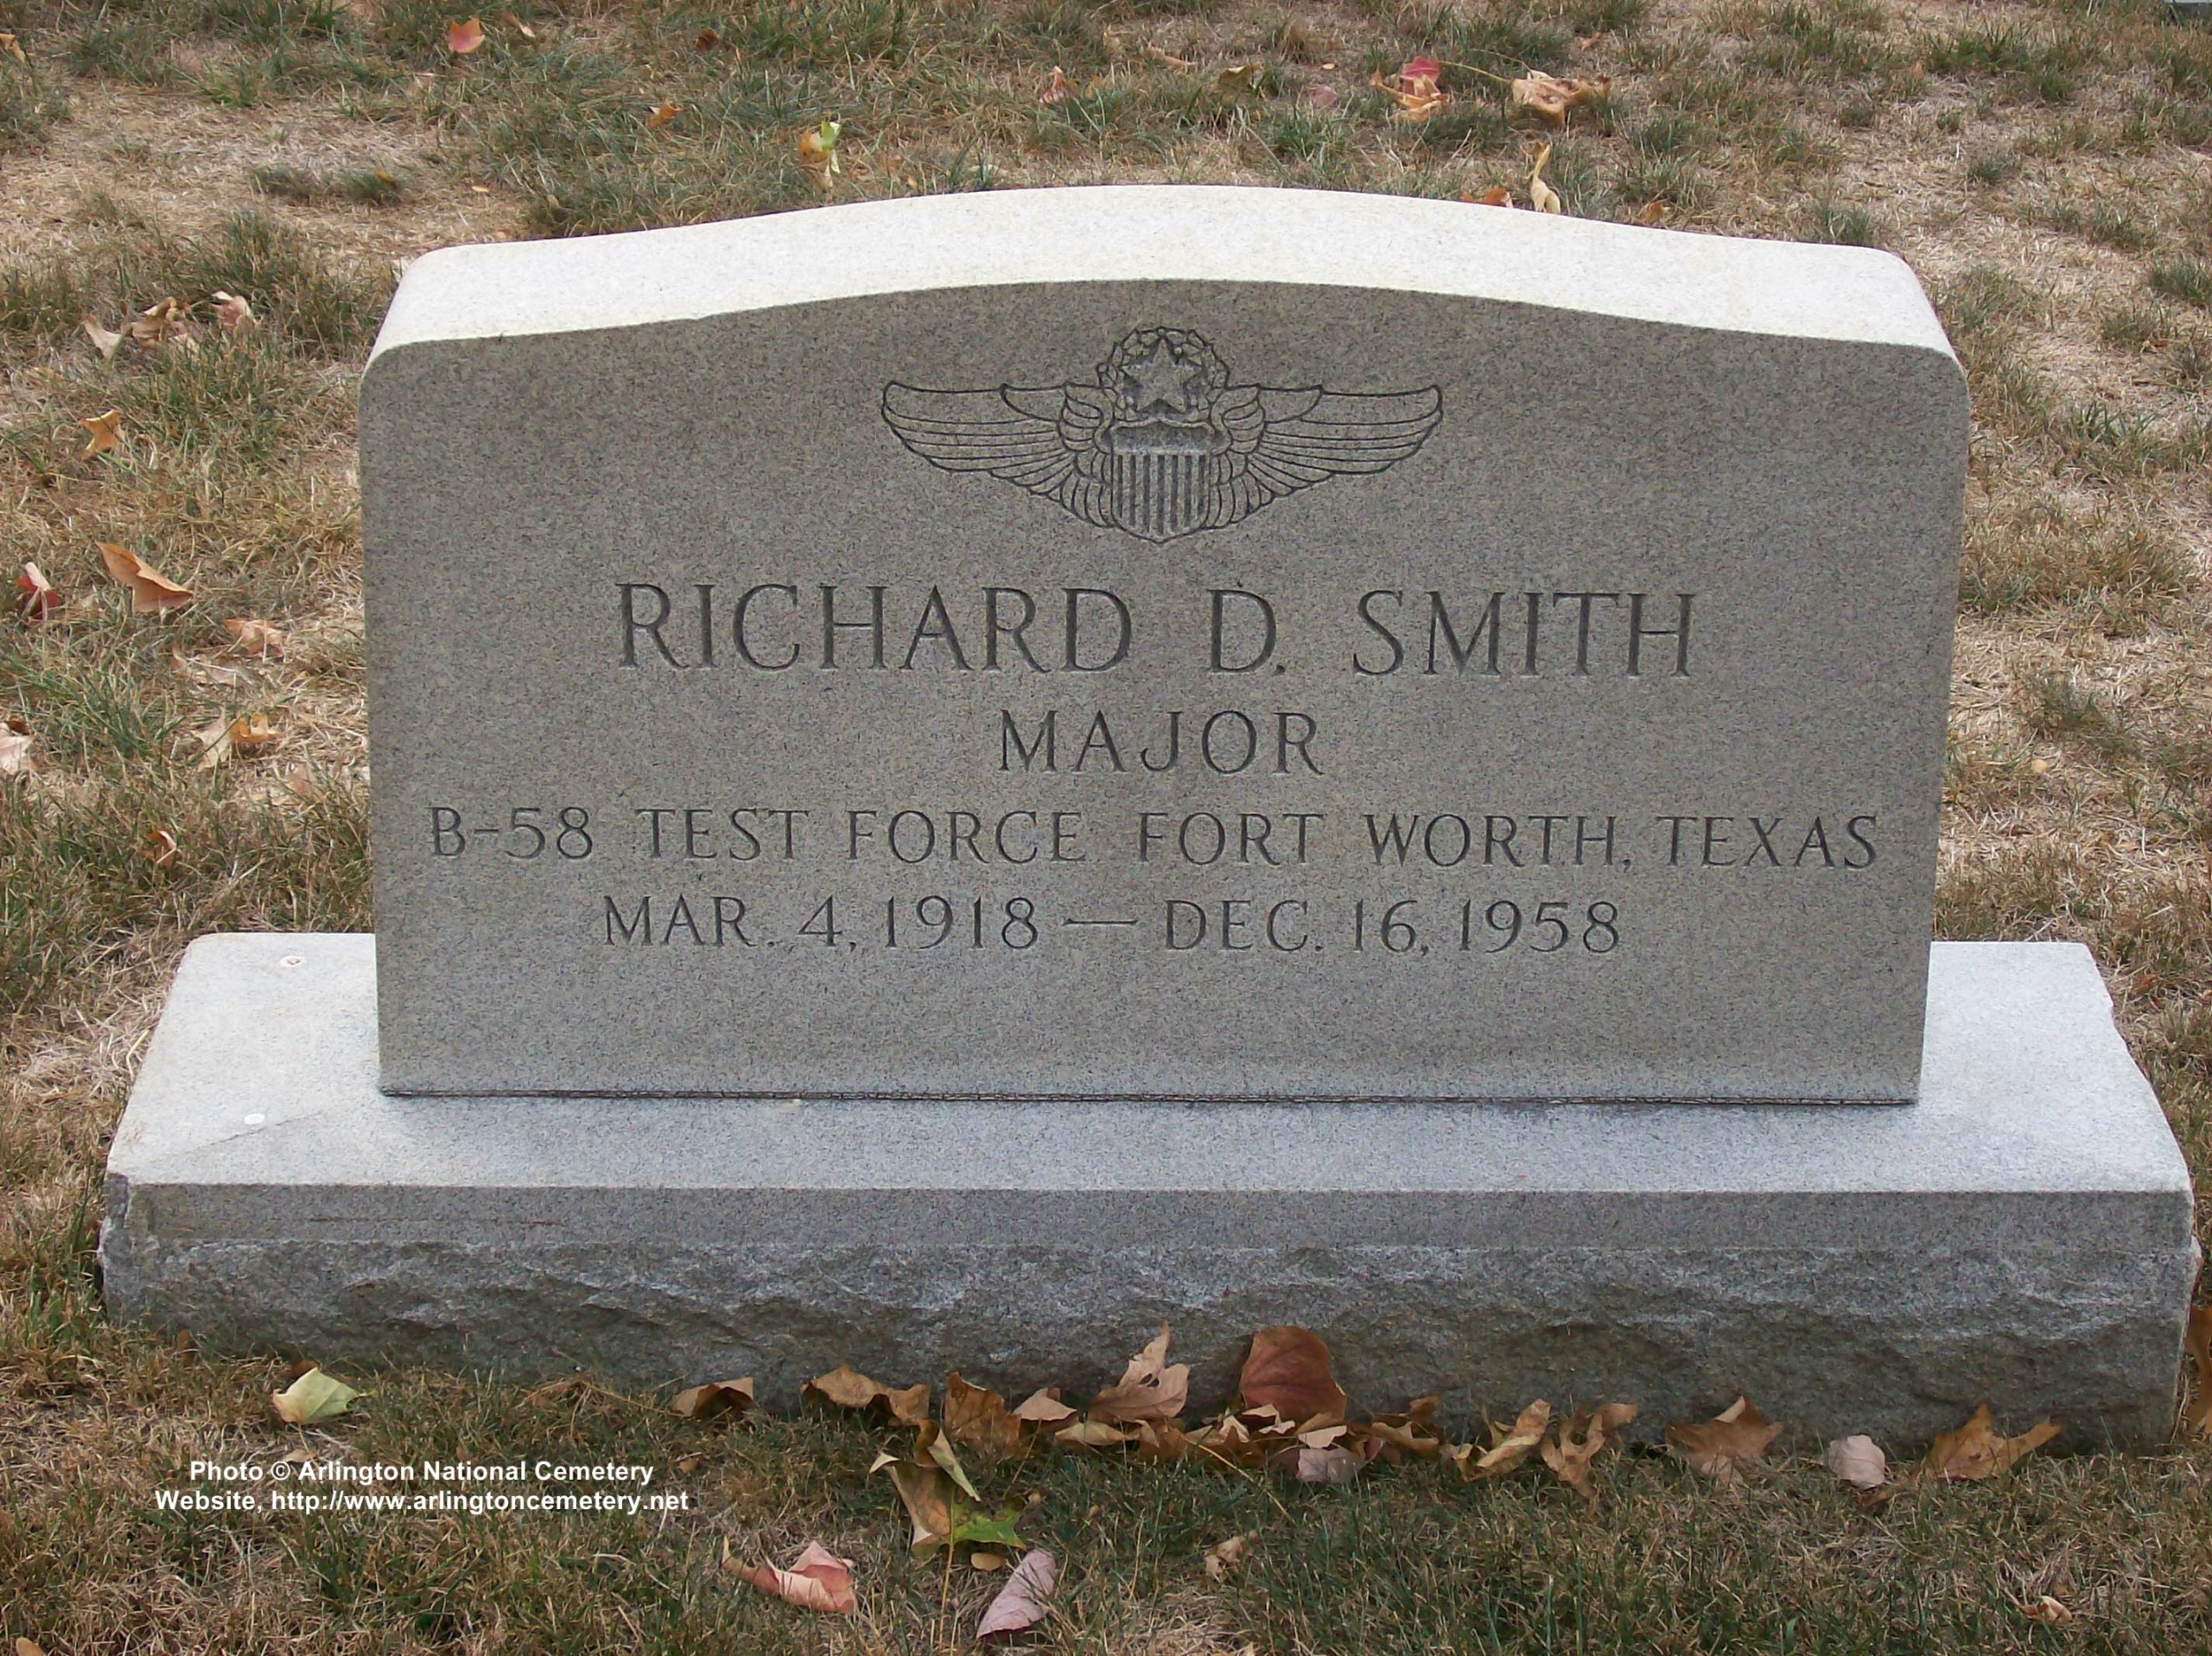 rdsmith-gravesite-photo-october-2007-001